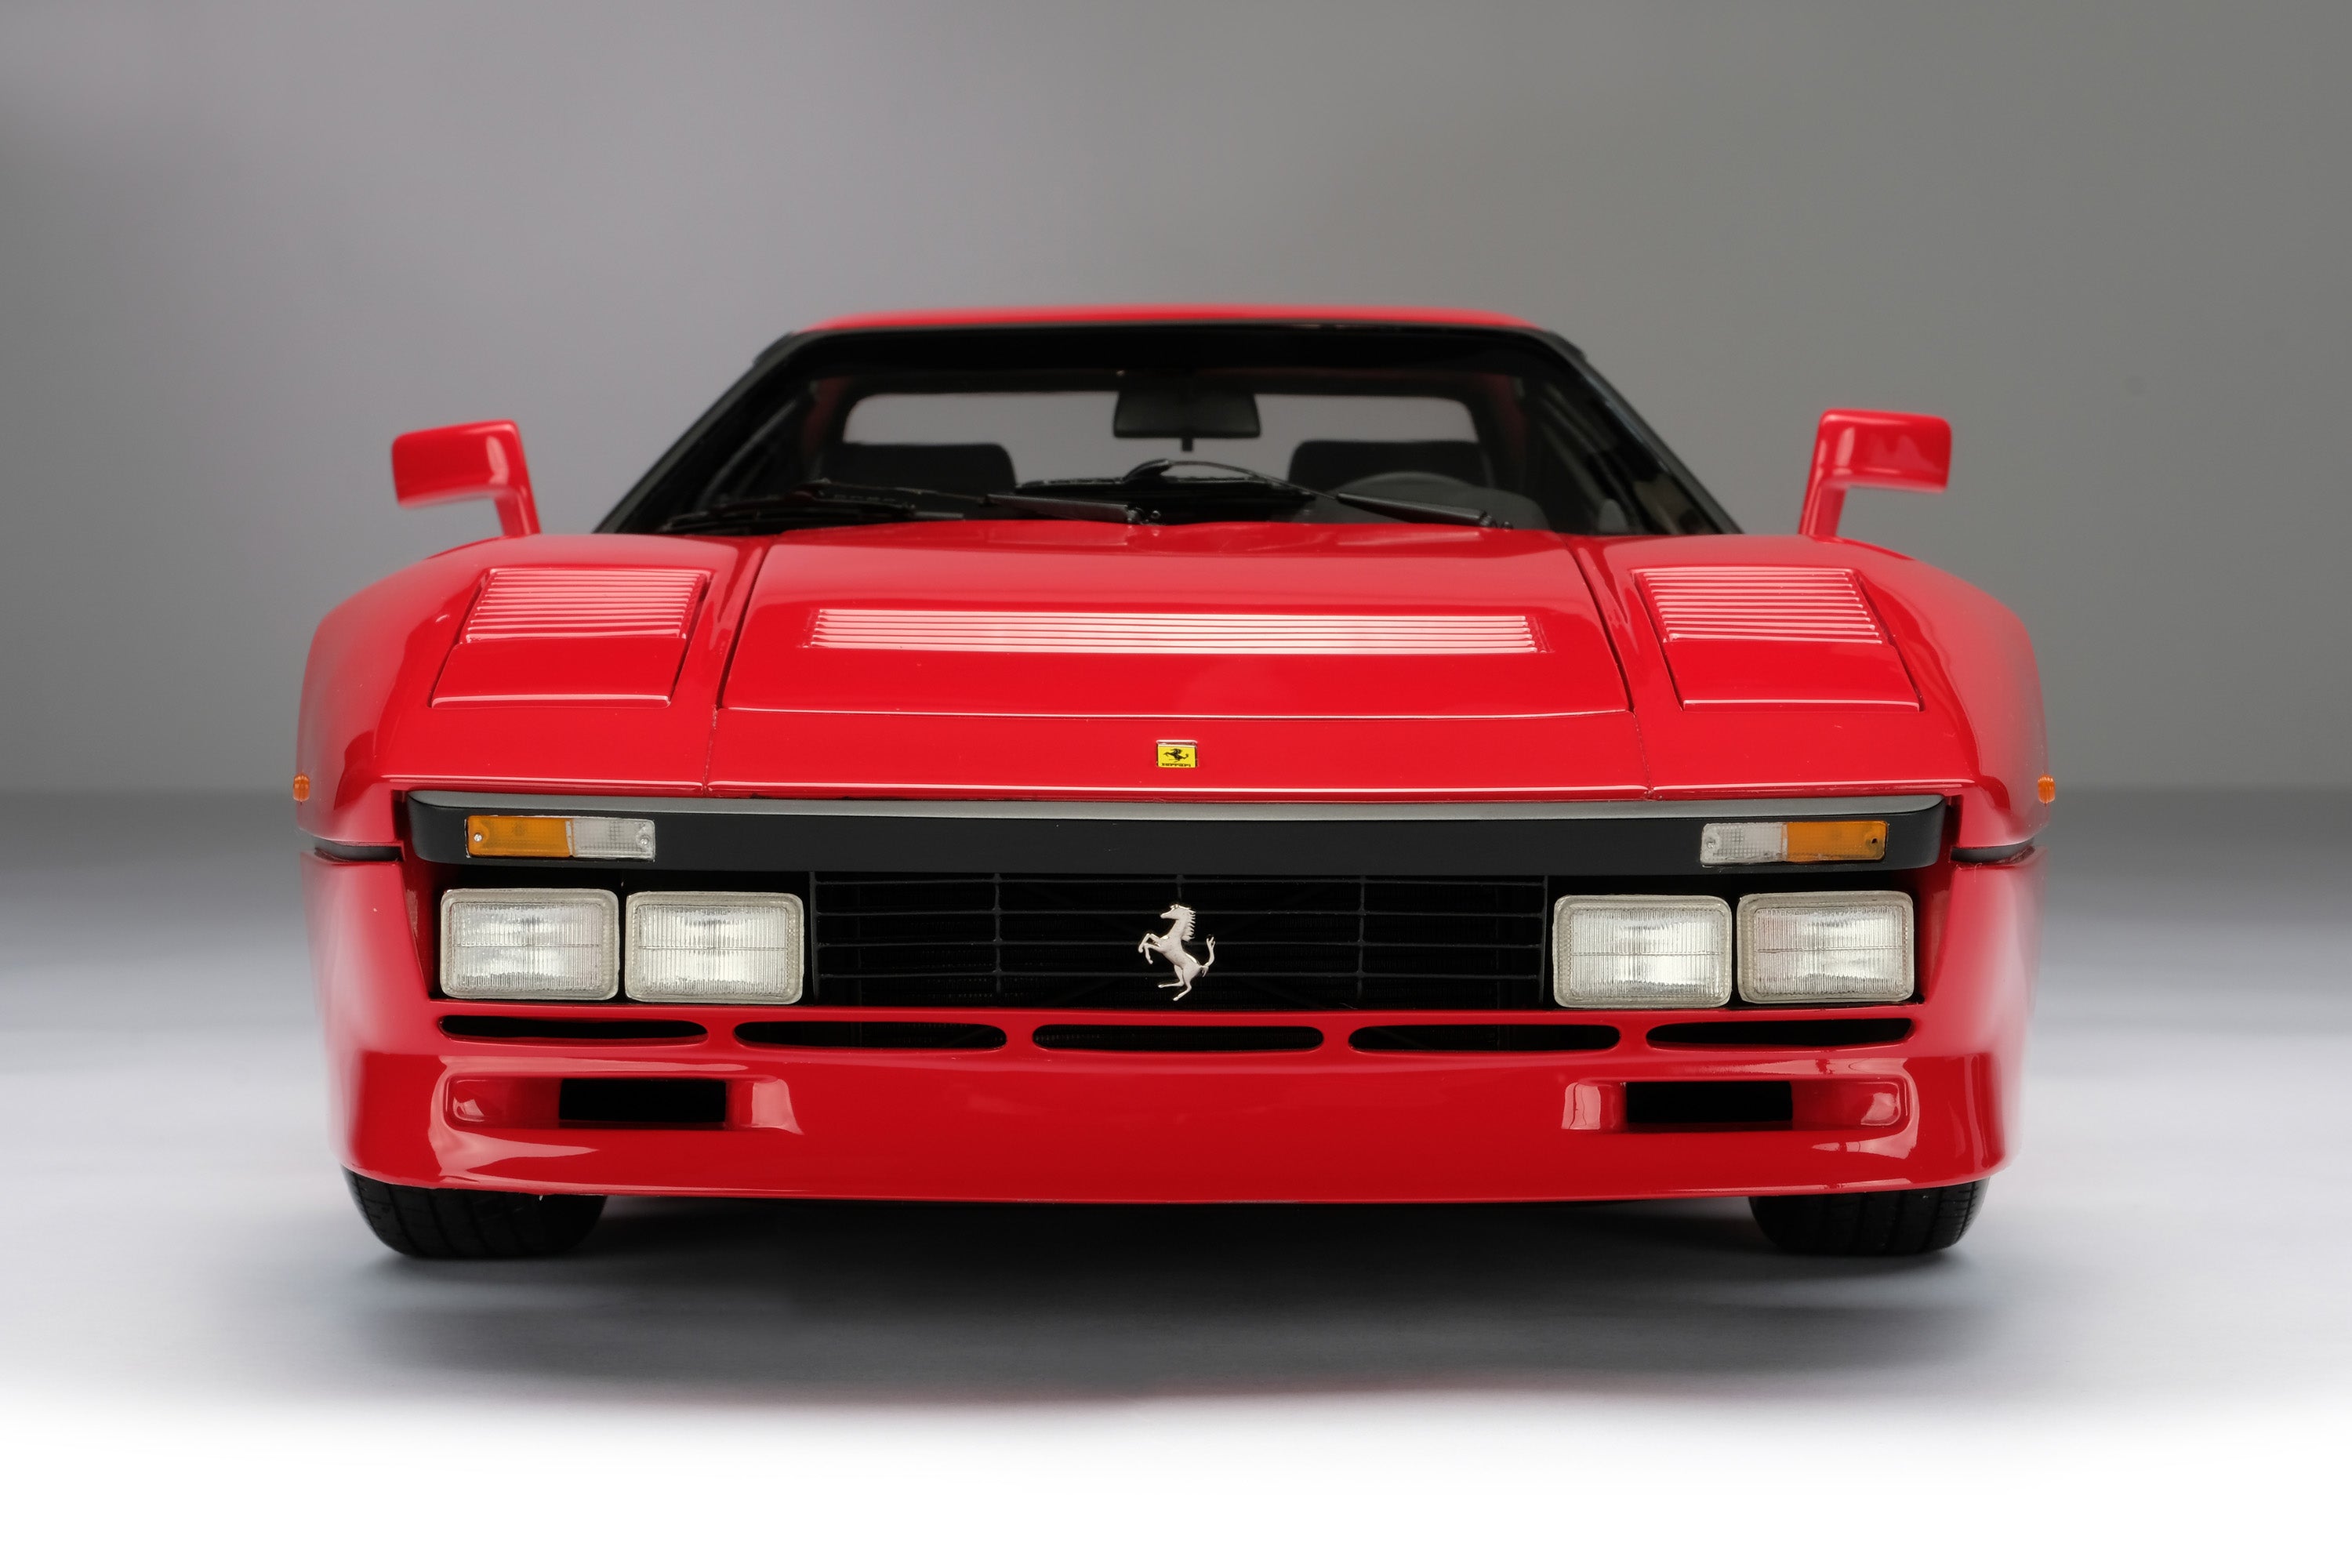 Ferrari 288 GTO (1984) – Amalgam Collection